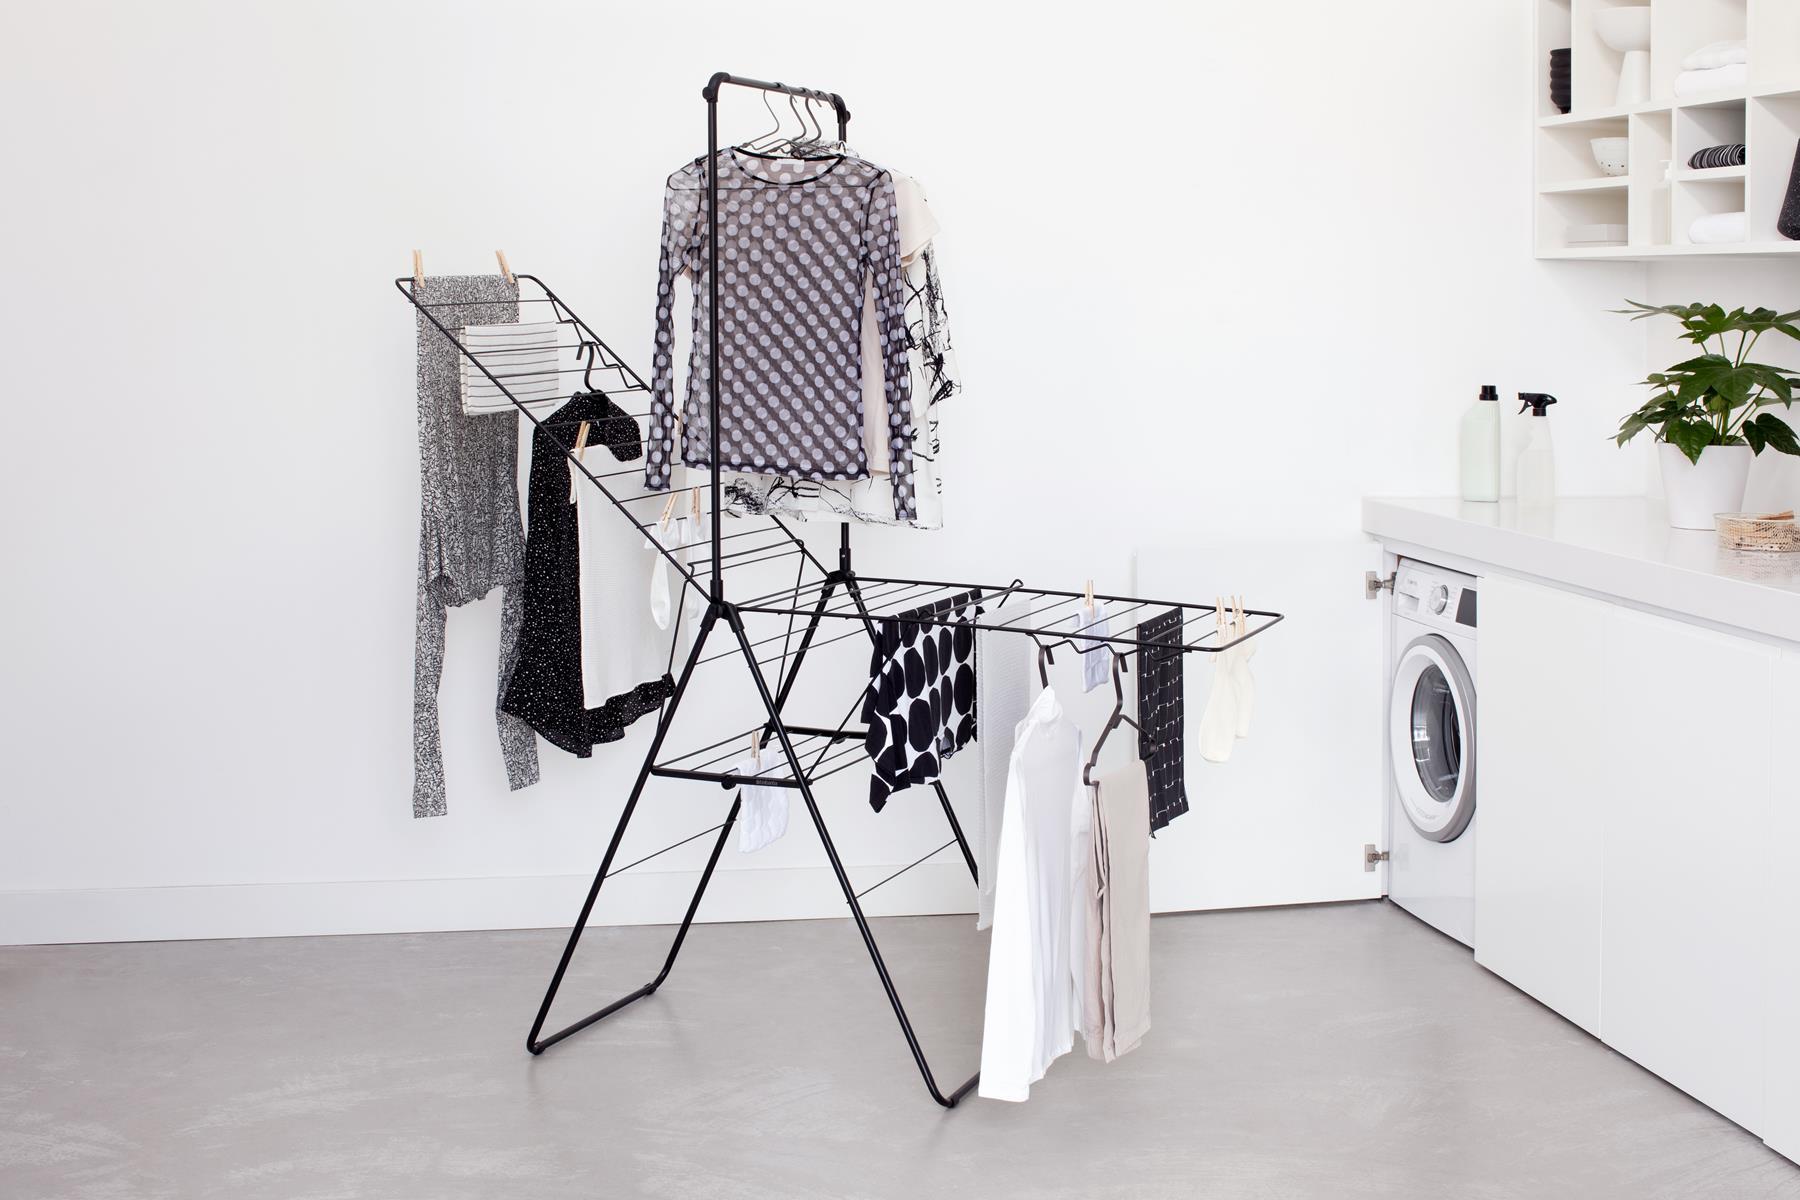 https://3fa-media.com/brabantia/brabantia-hangon-clothes-drying-rack-181-cm-with-rod__103057_469187e-s2500x2500.jpg